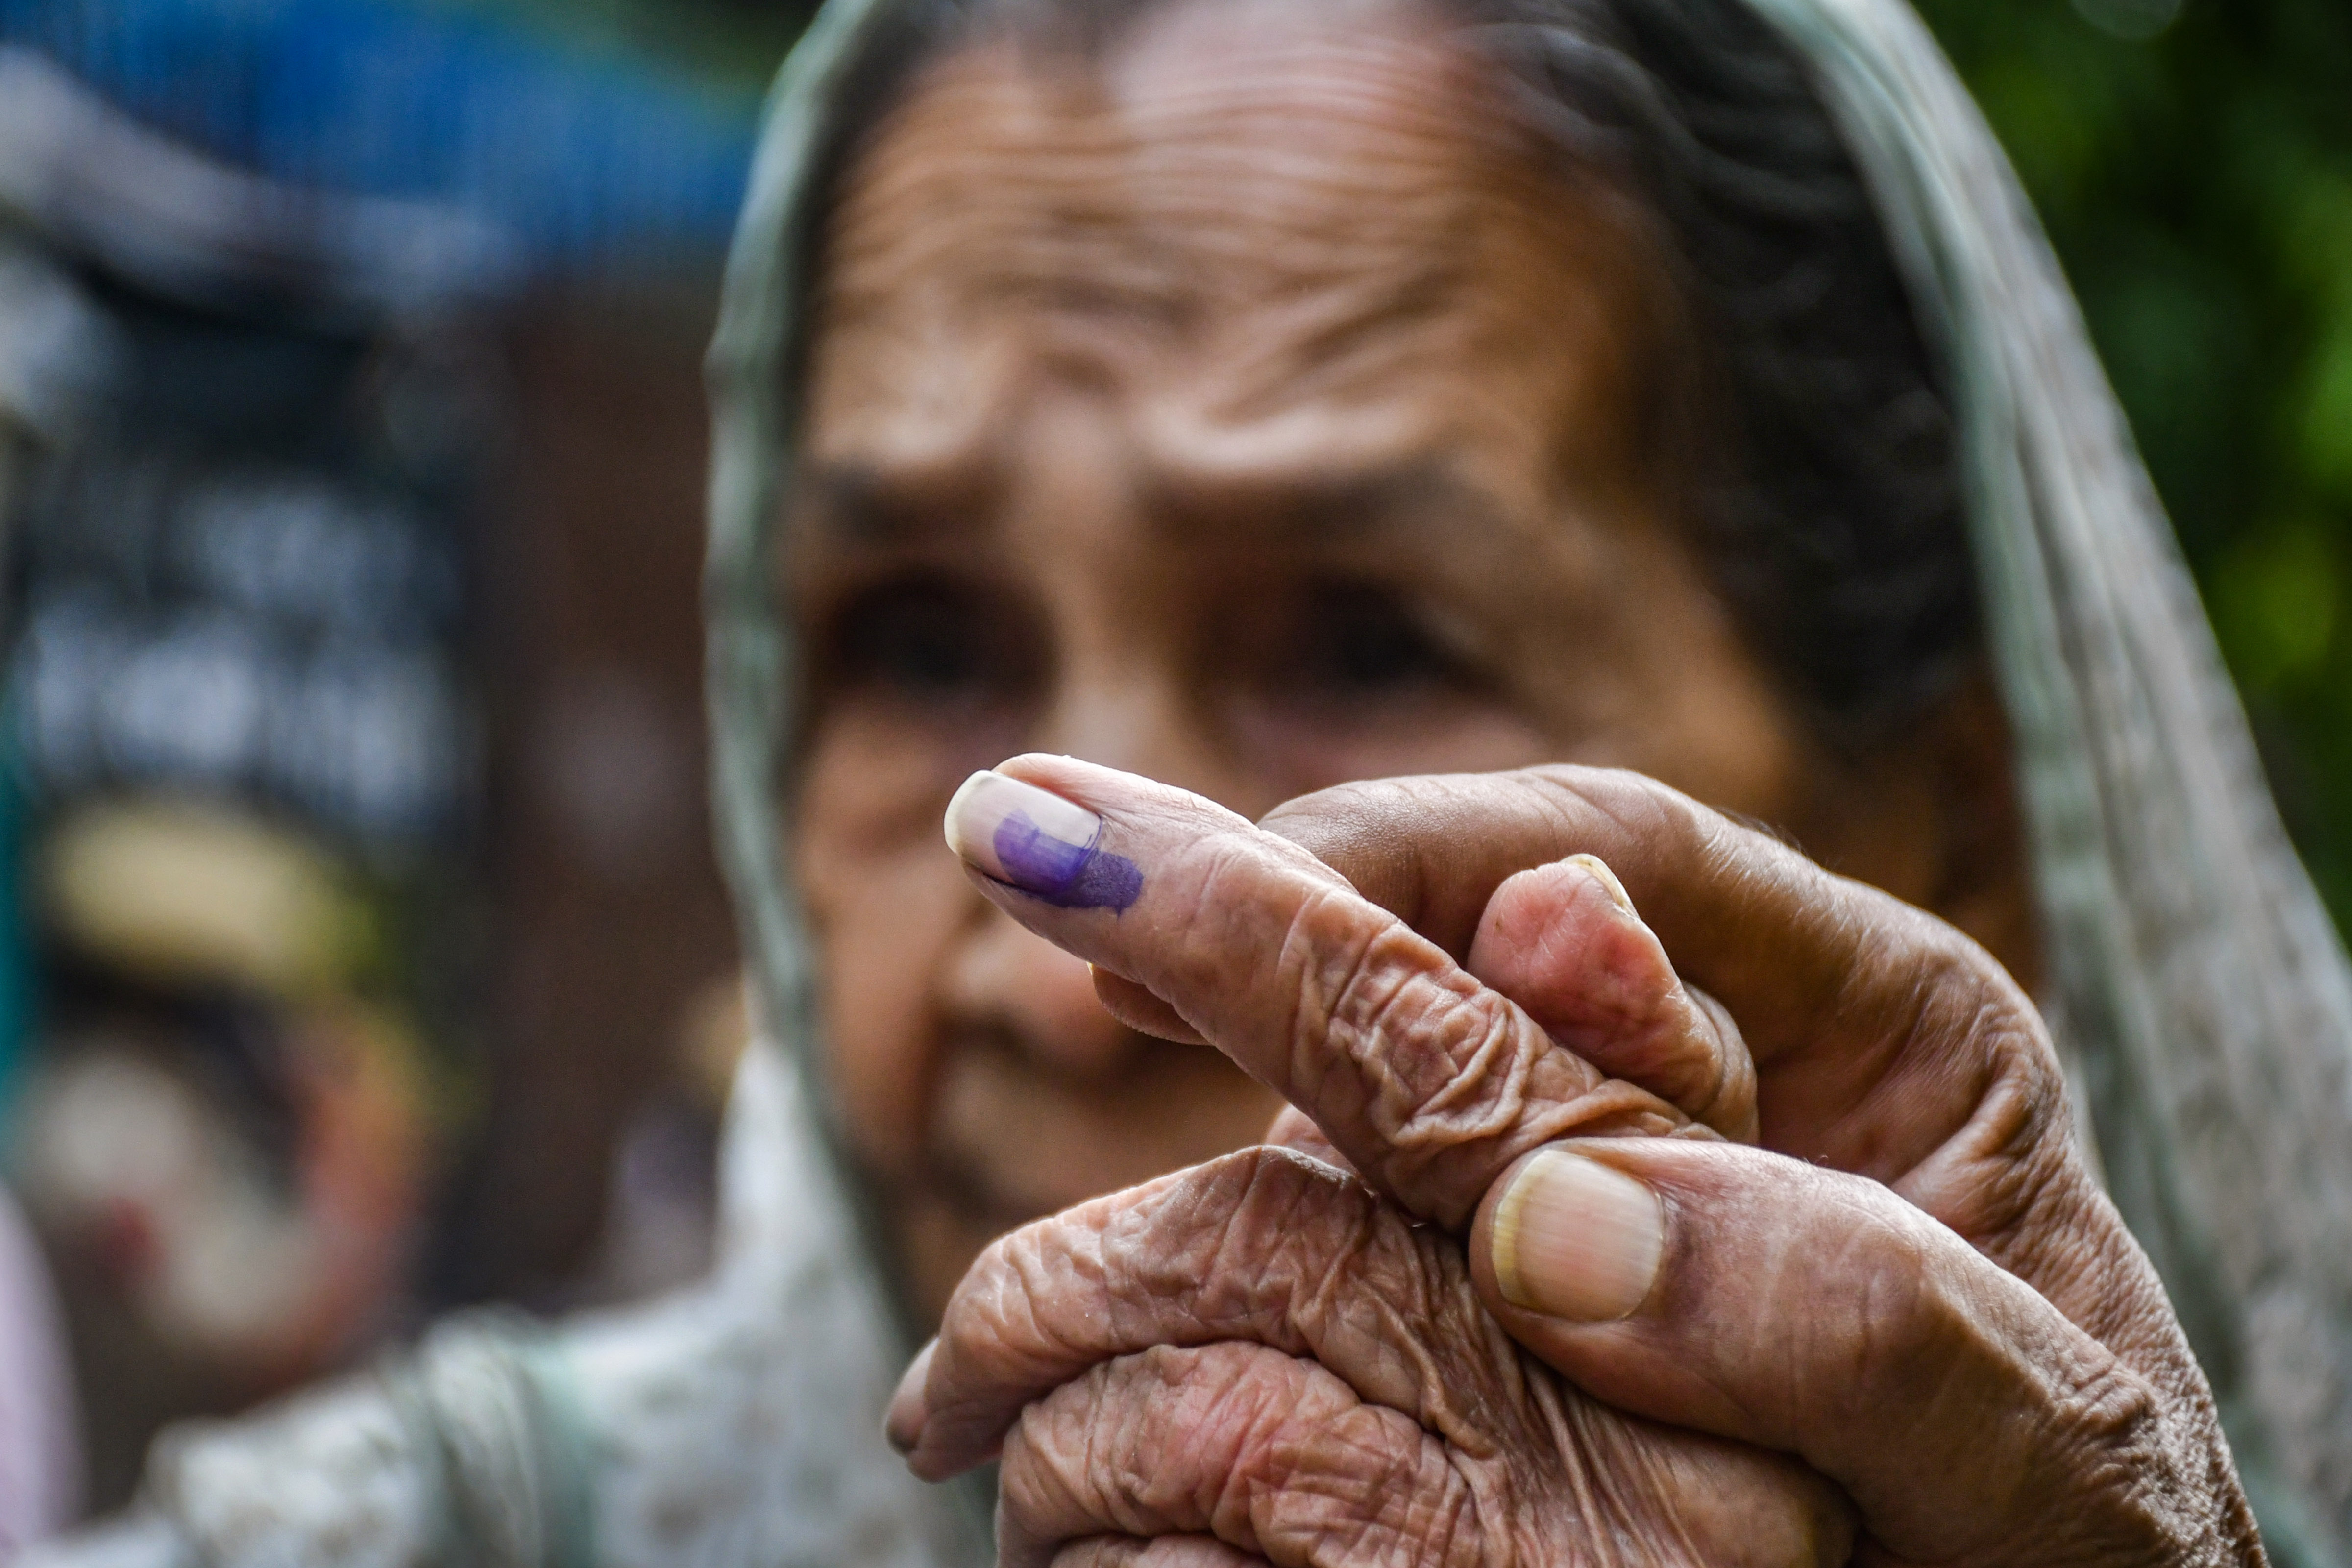 43.75 pc voter turnout in Rajinder Nagar bypoll in Delhi: Officials